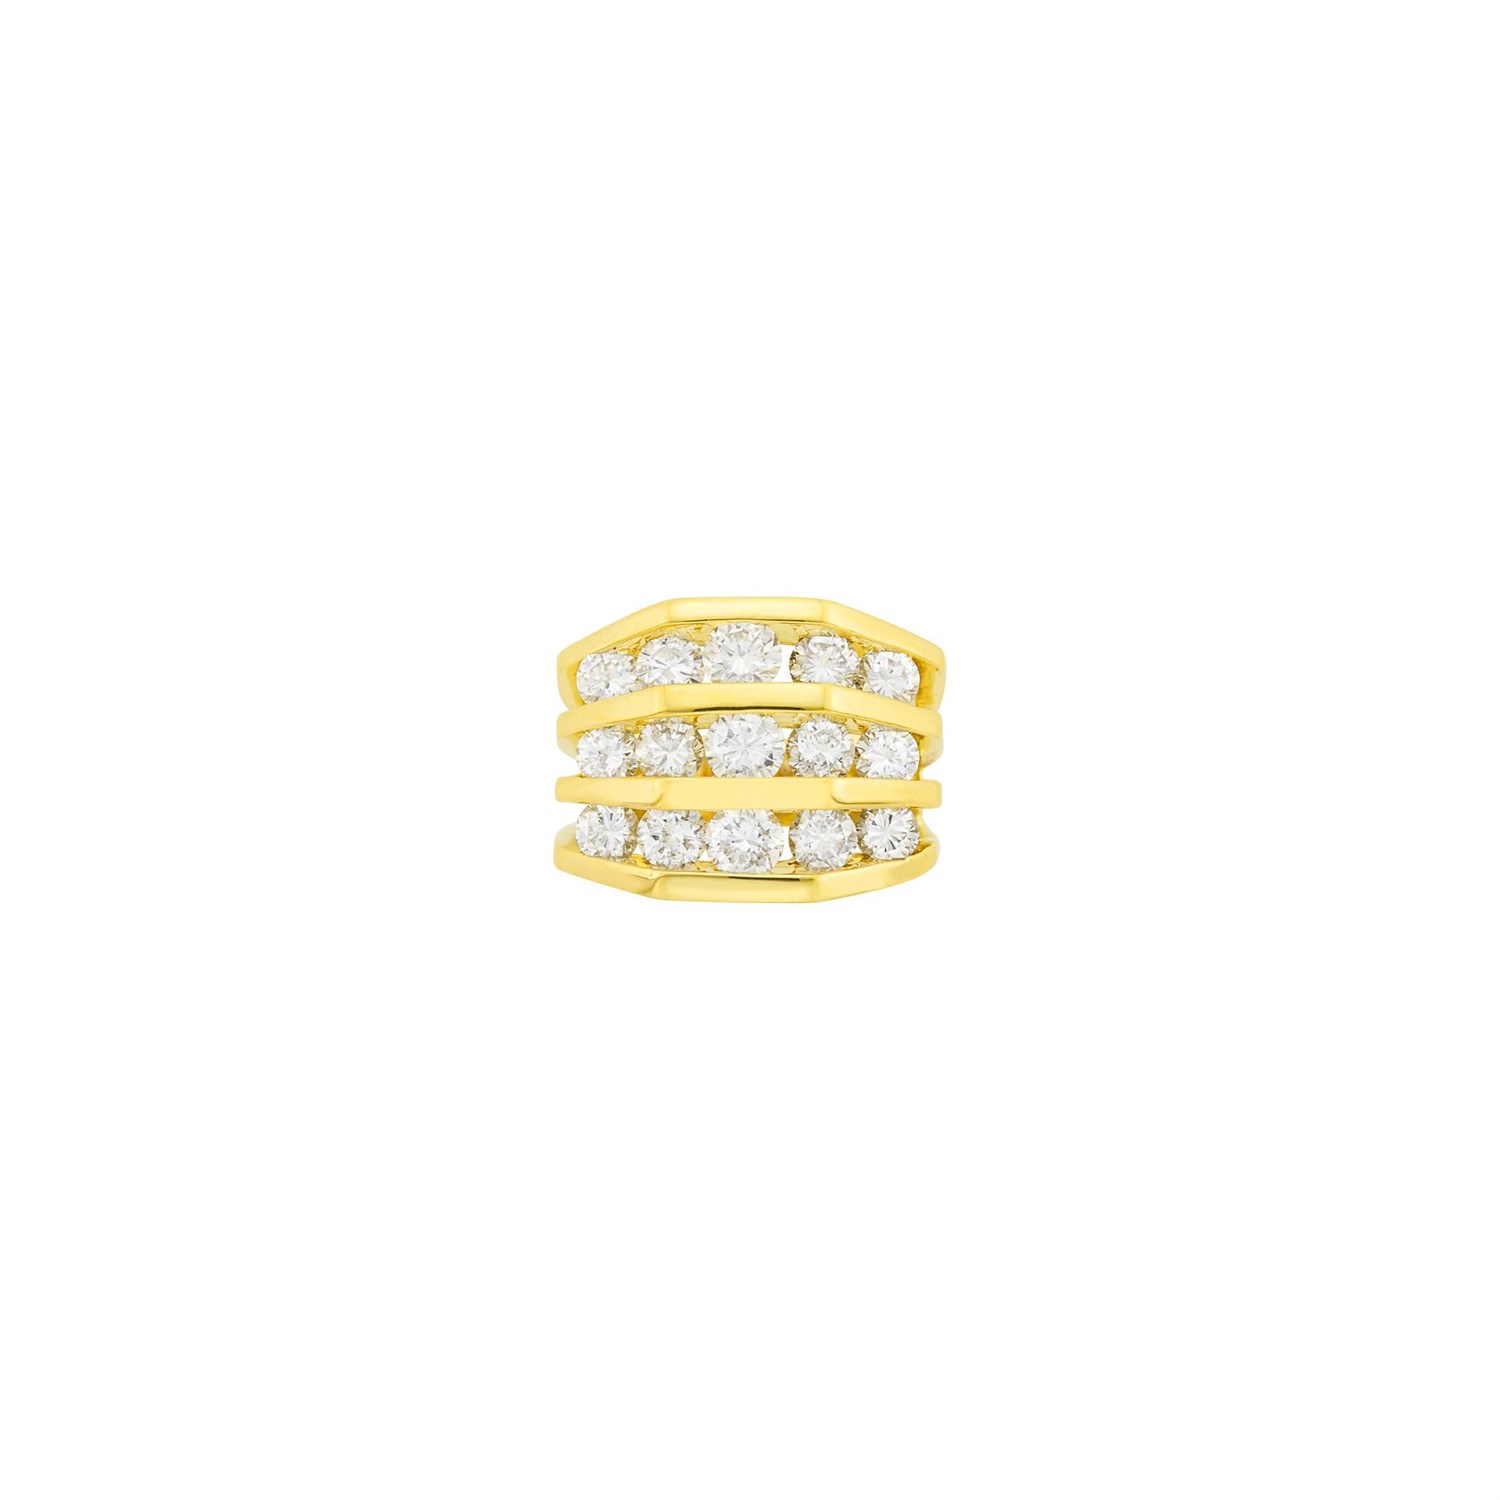 Lot 109 - Jose Hess Gold and Diamond Ring